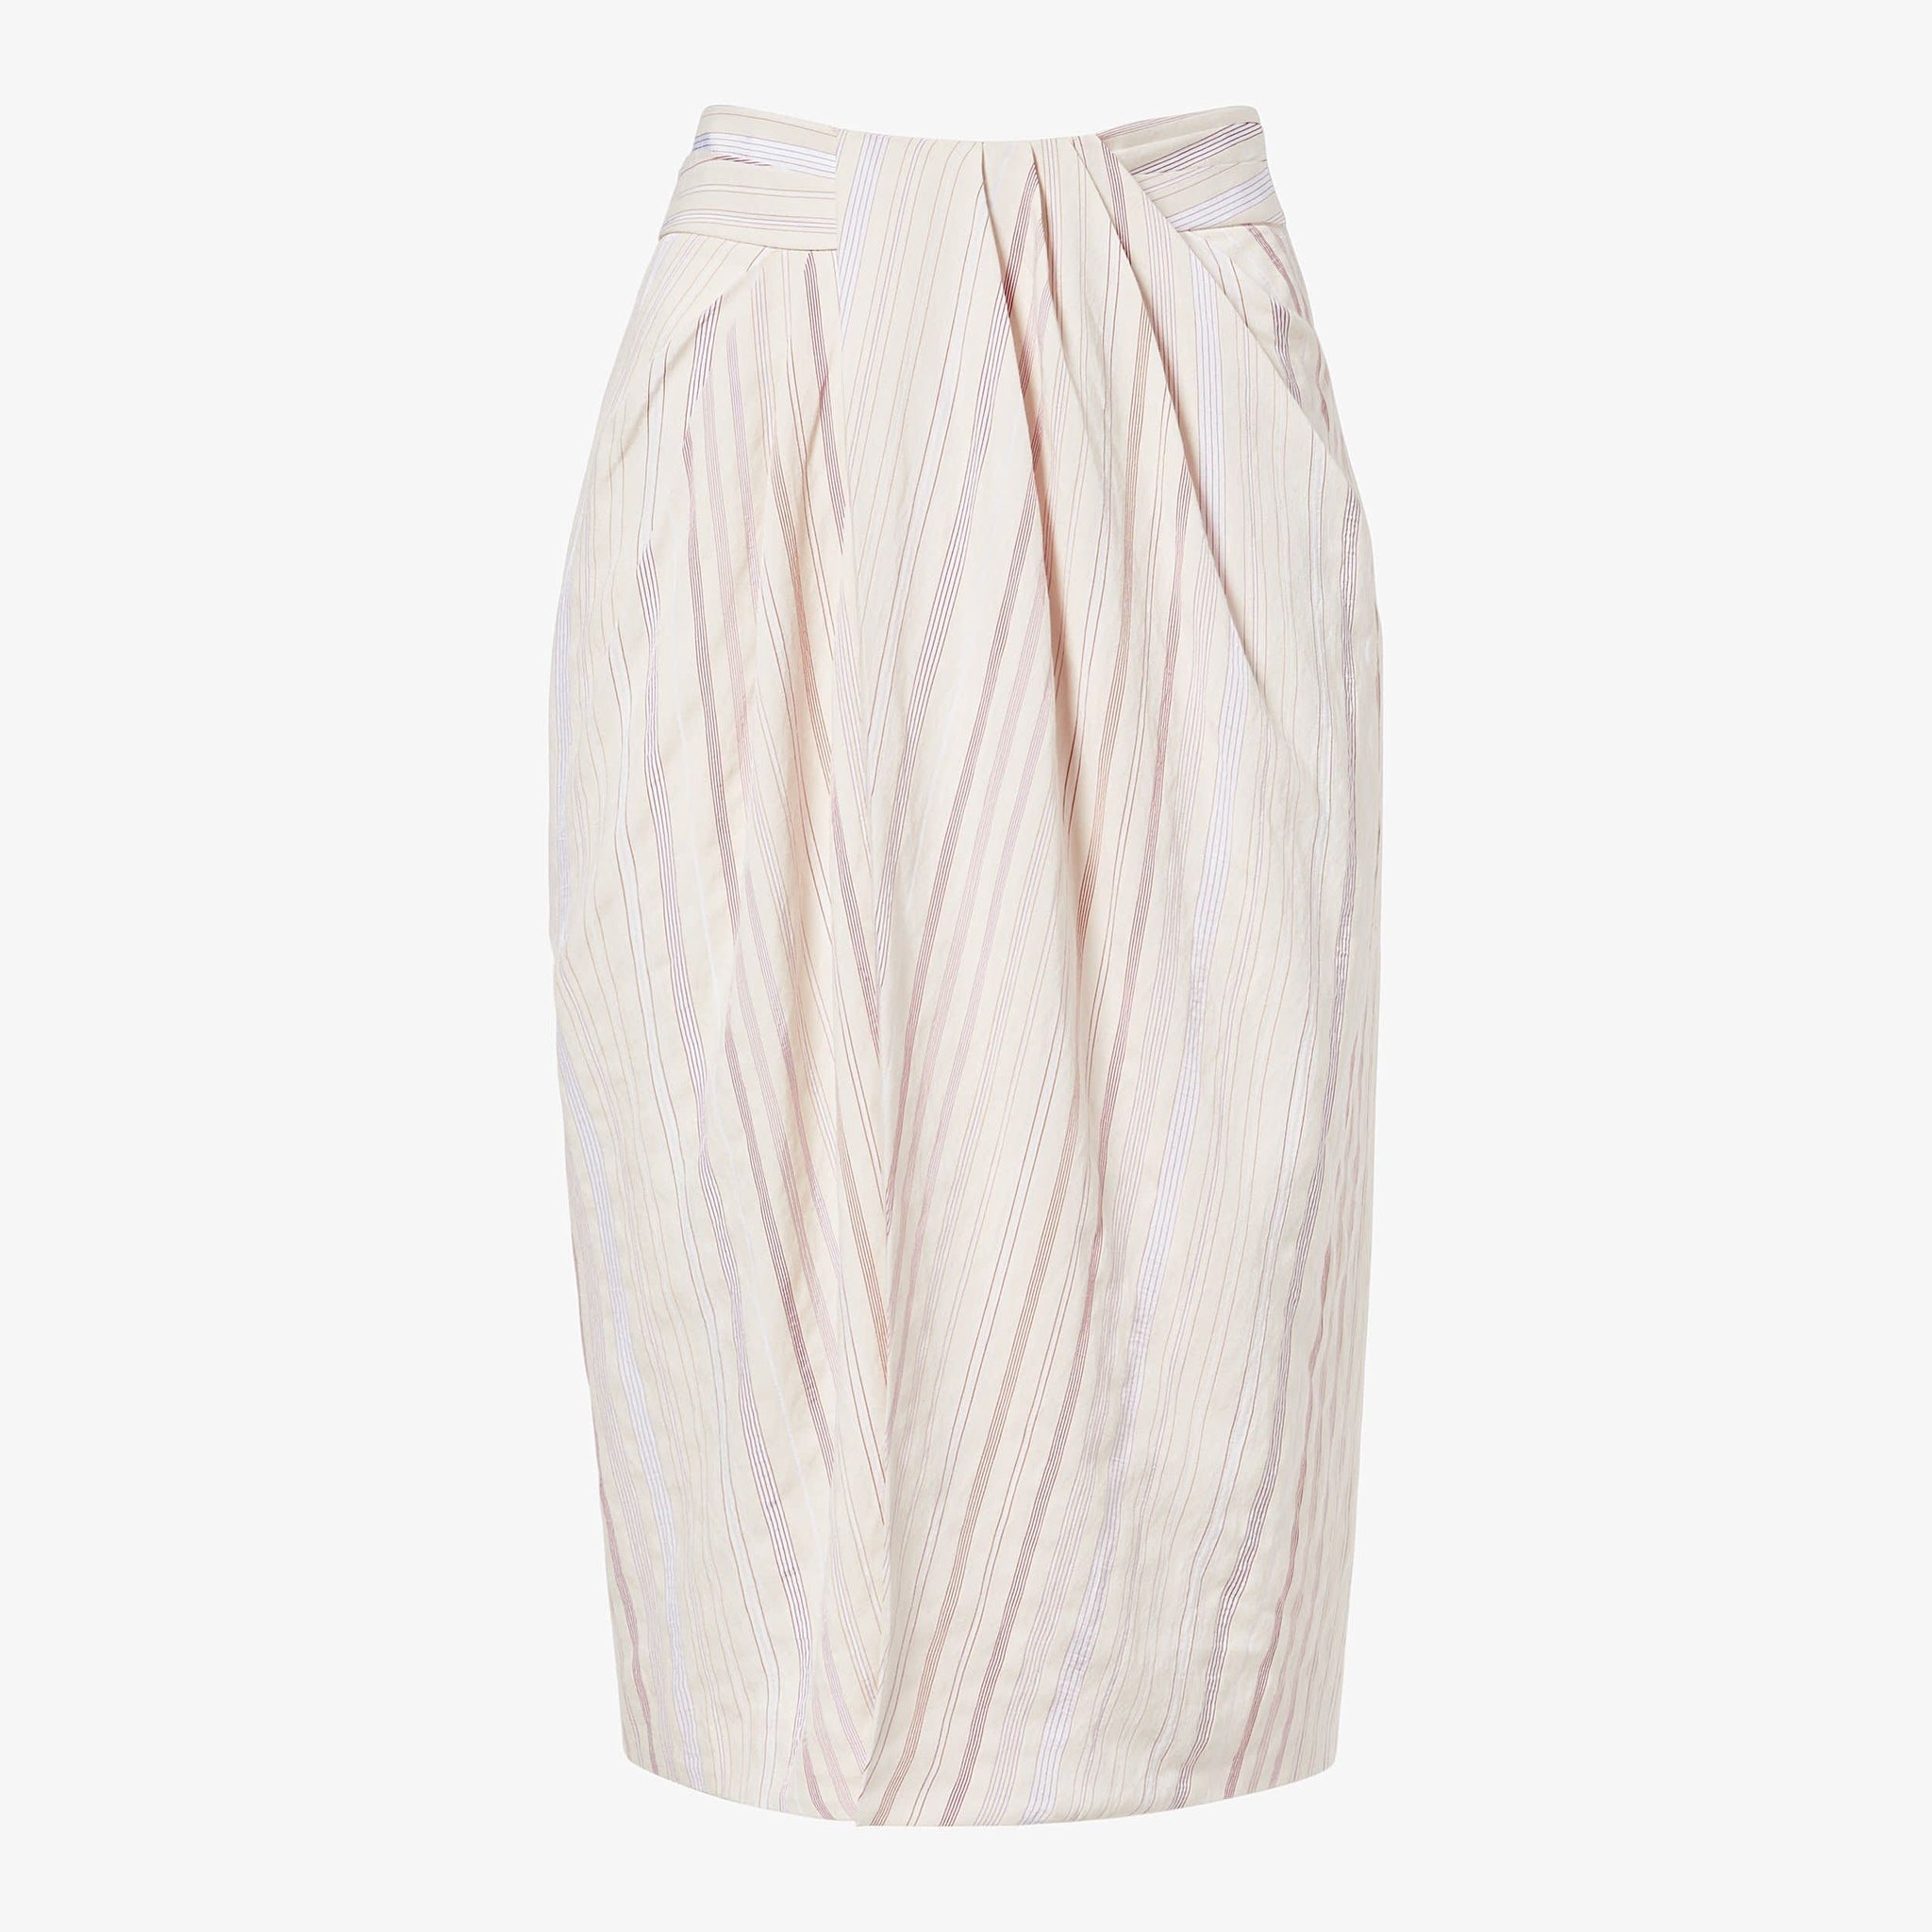 Packshot image of the lenox skirt in twill stripe in ivory / red